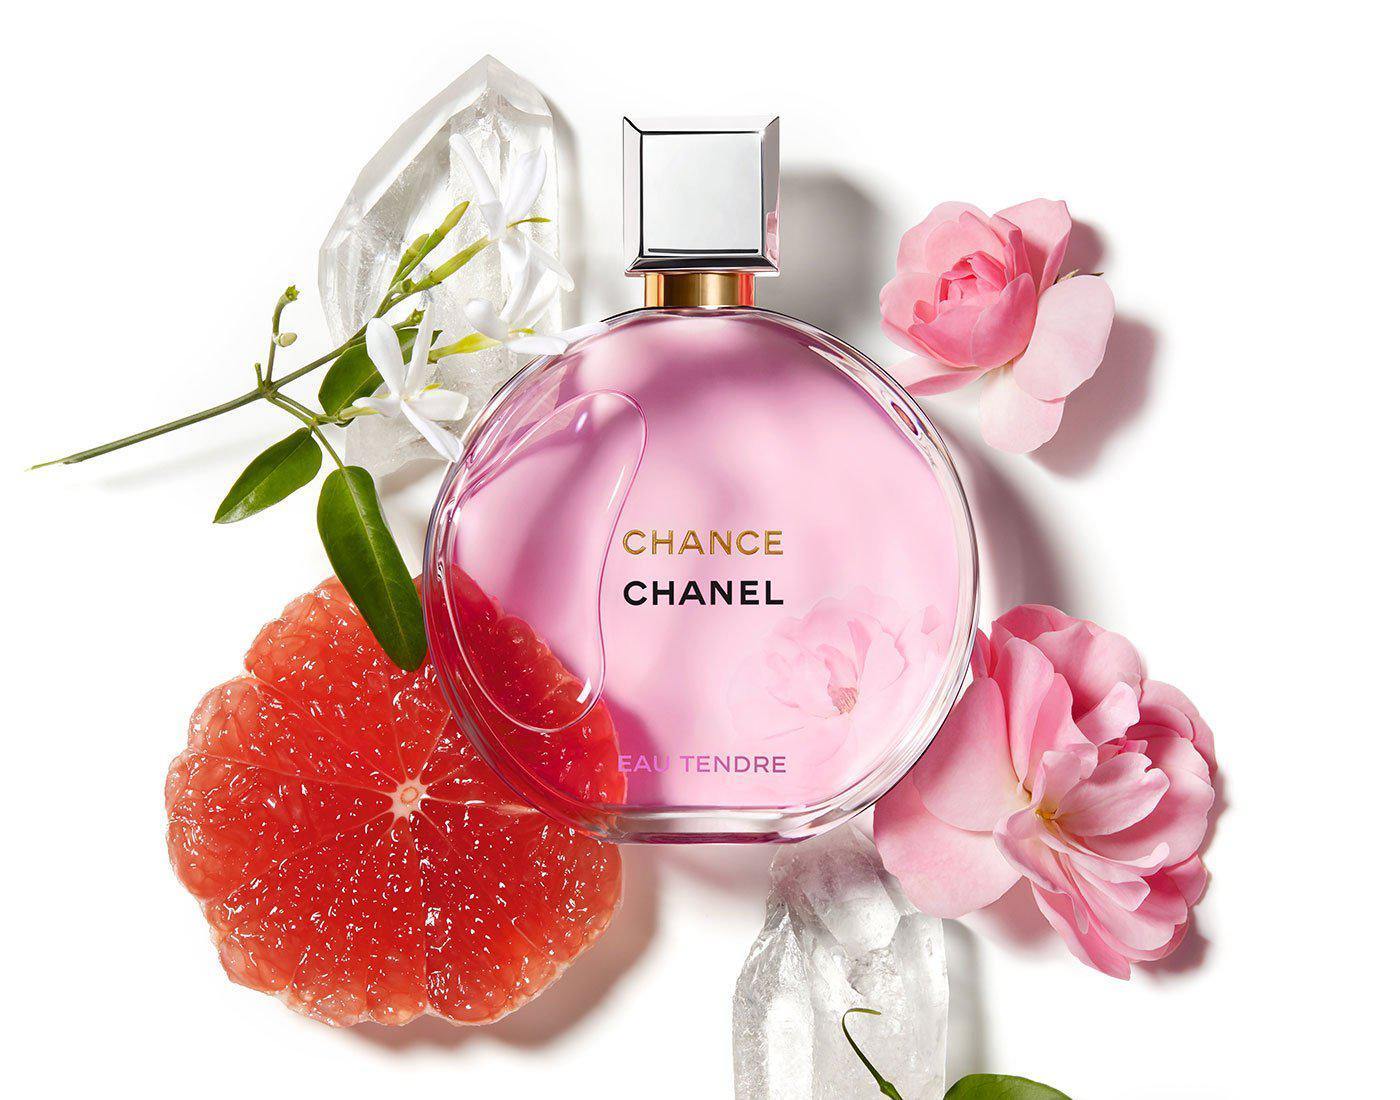 aanvulling pijn musical Chance Eau Tendre Perfume By Chanel